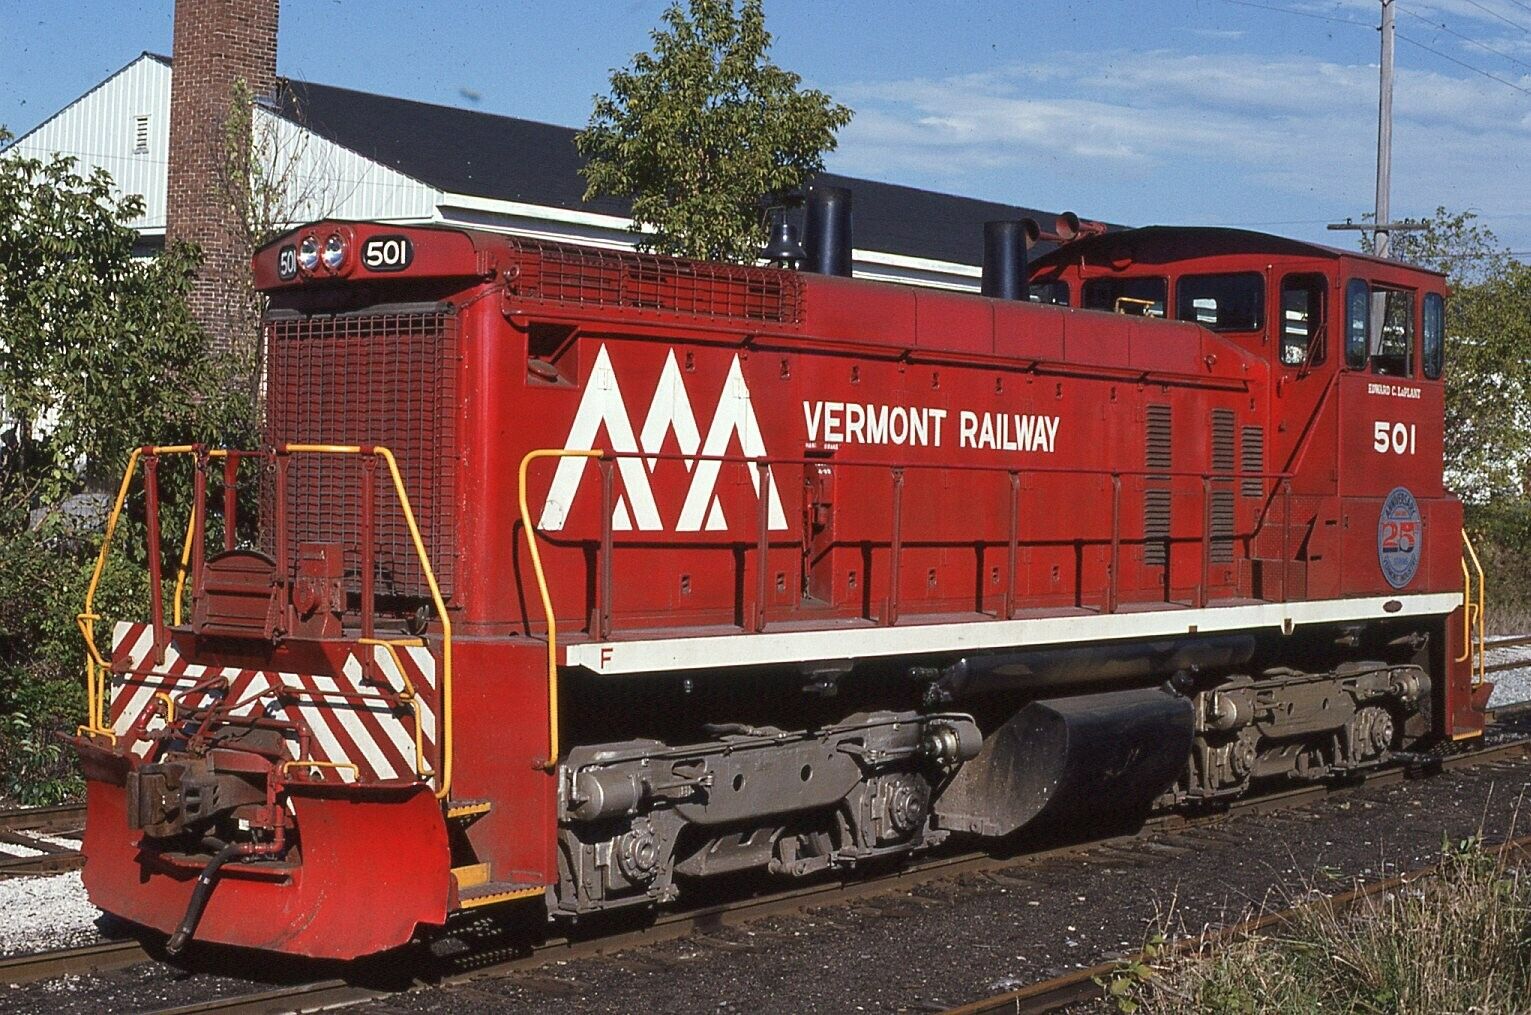 Original Train Slide Vermont Railway #501 09/1989 Rutland VT #28